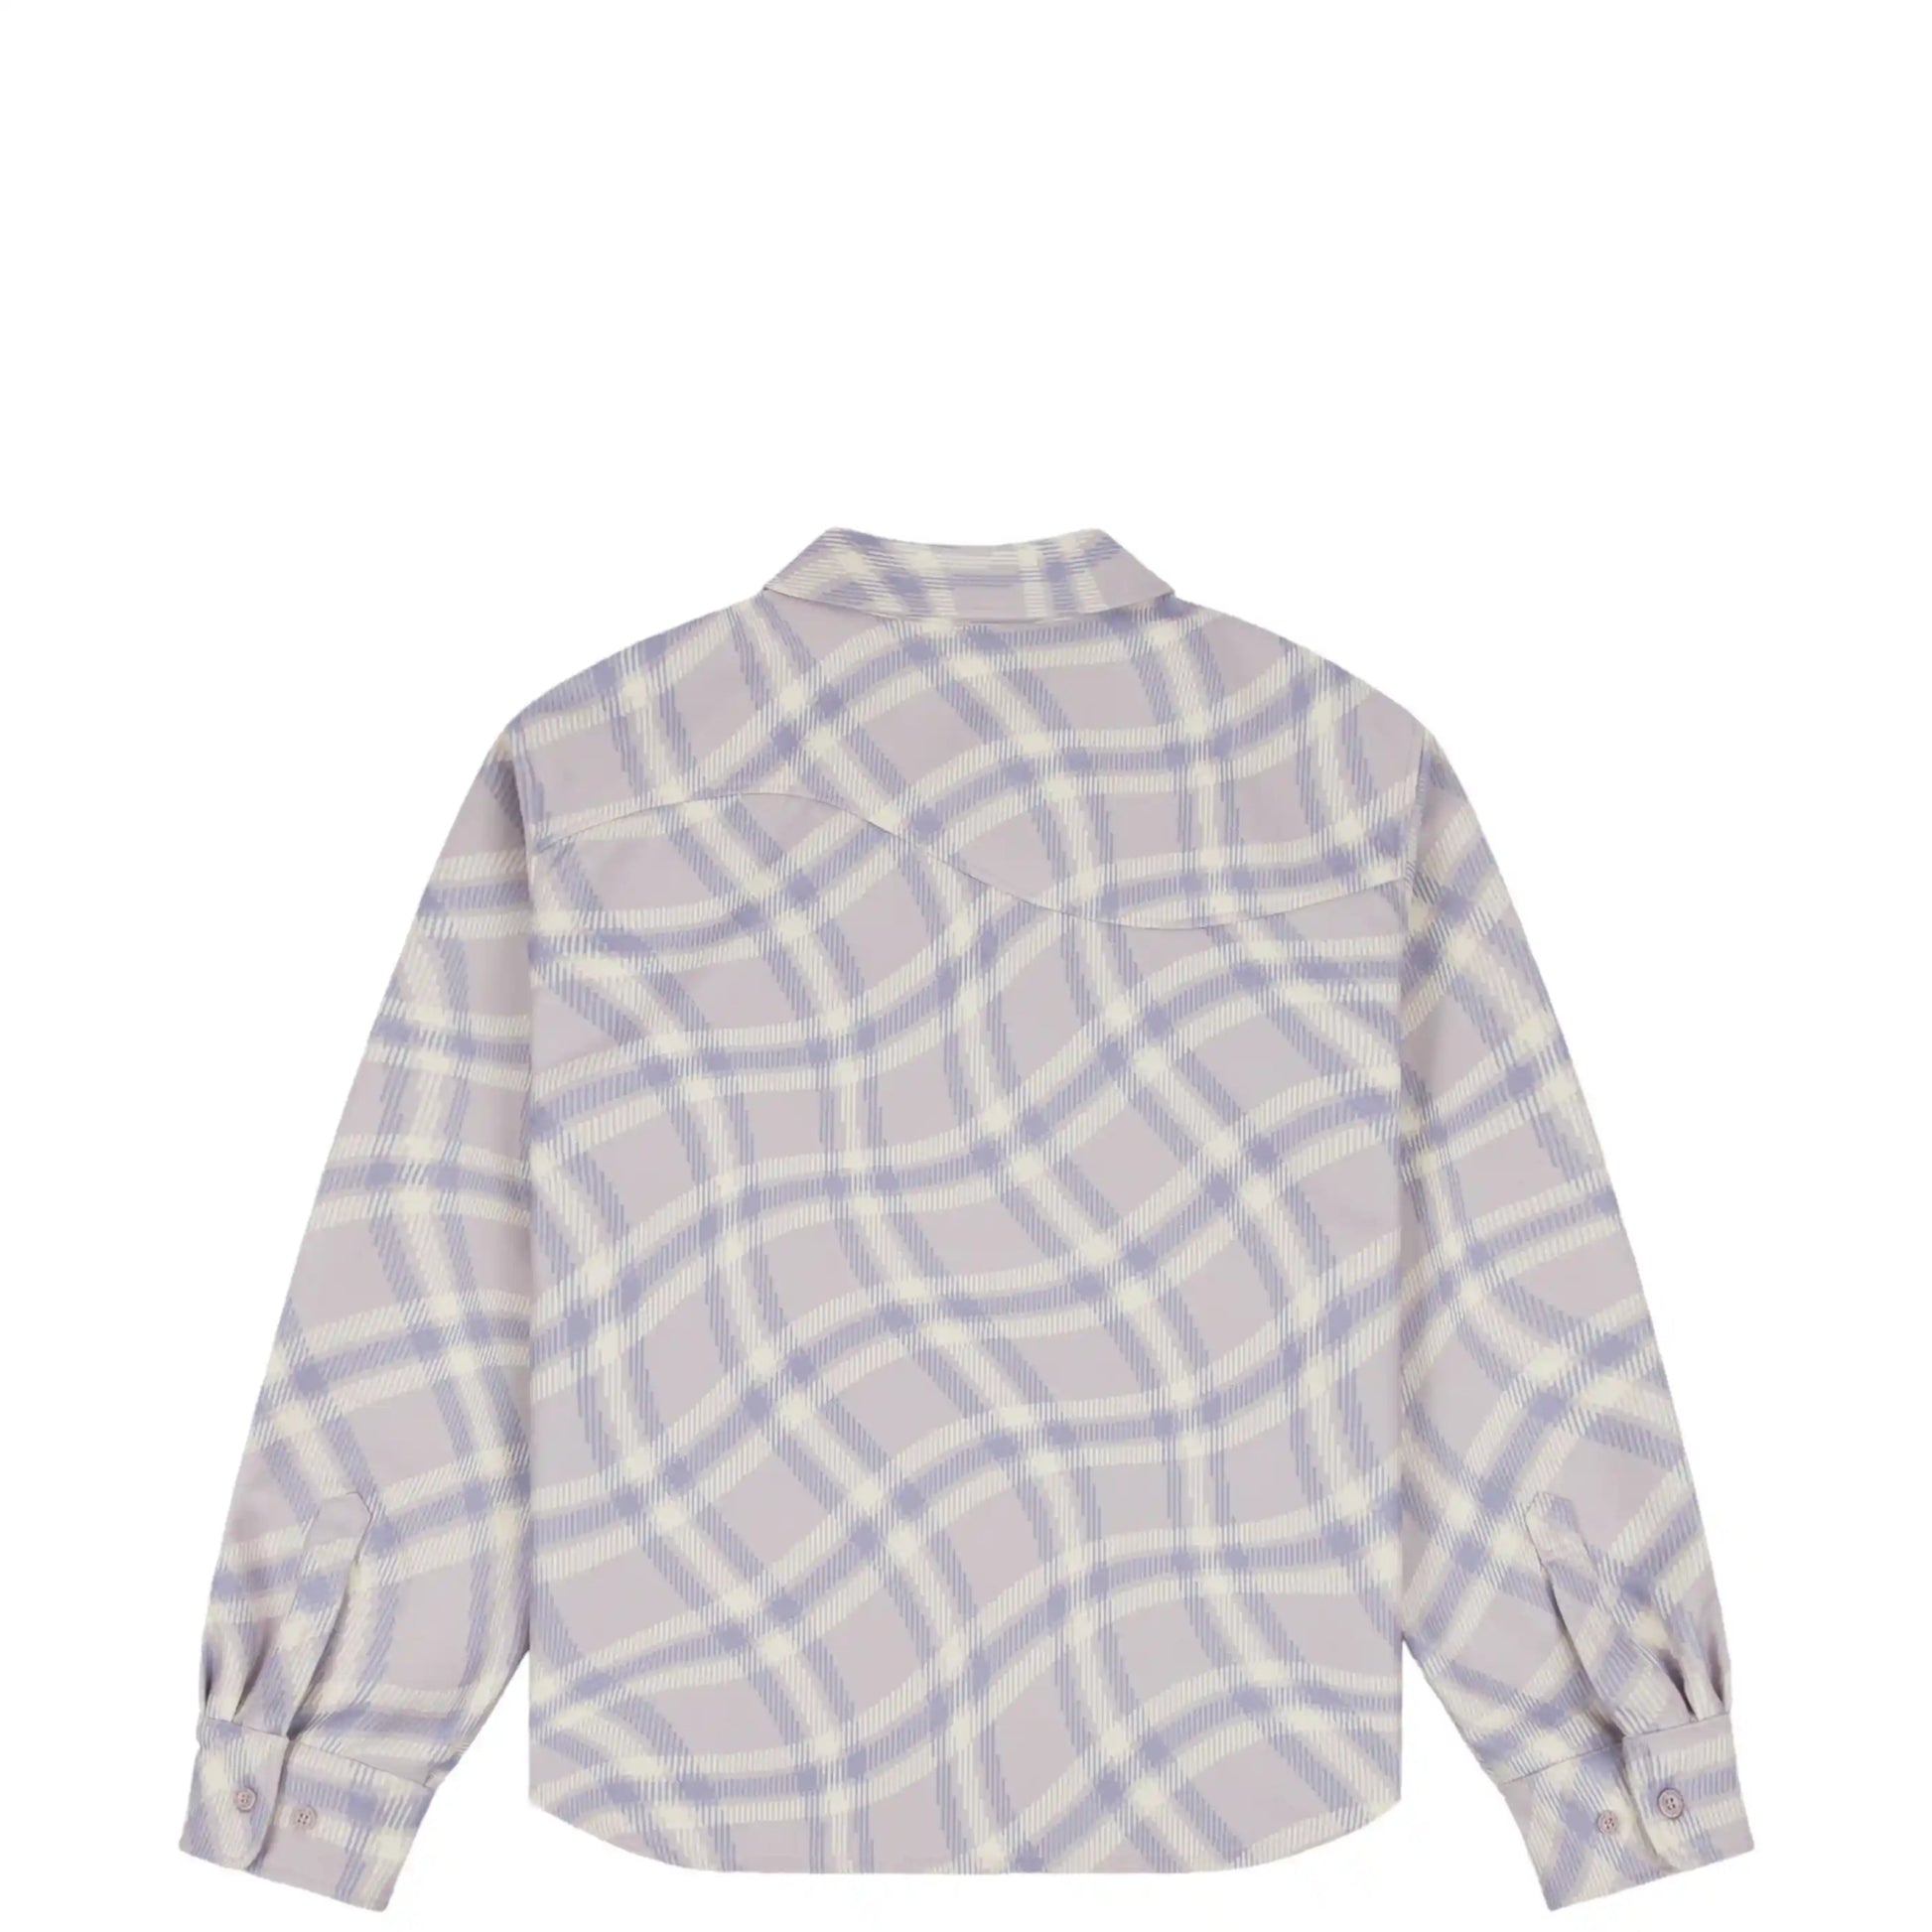 Dime Plaid Fleece Shirt, lilac gray - Tiki Room Skateboards - 2